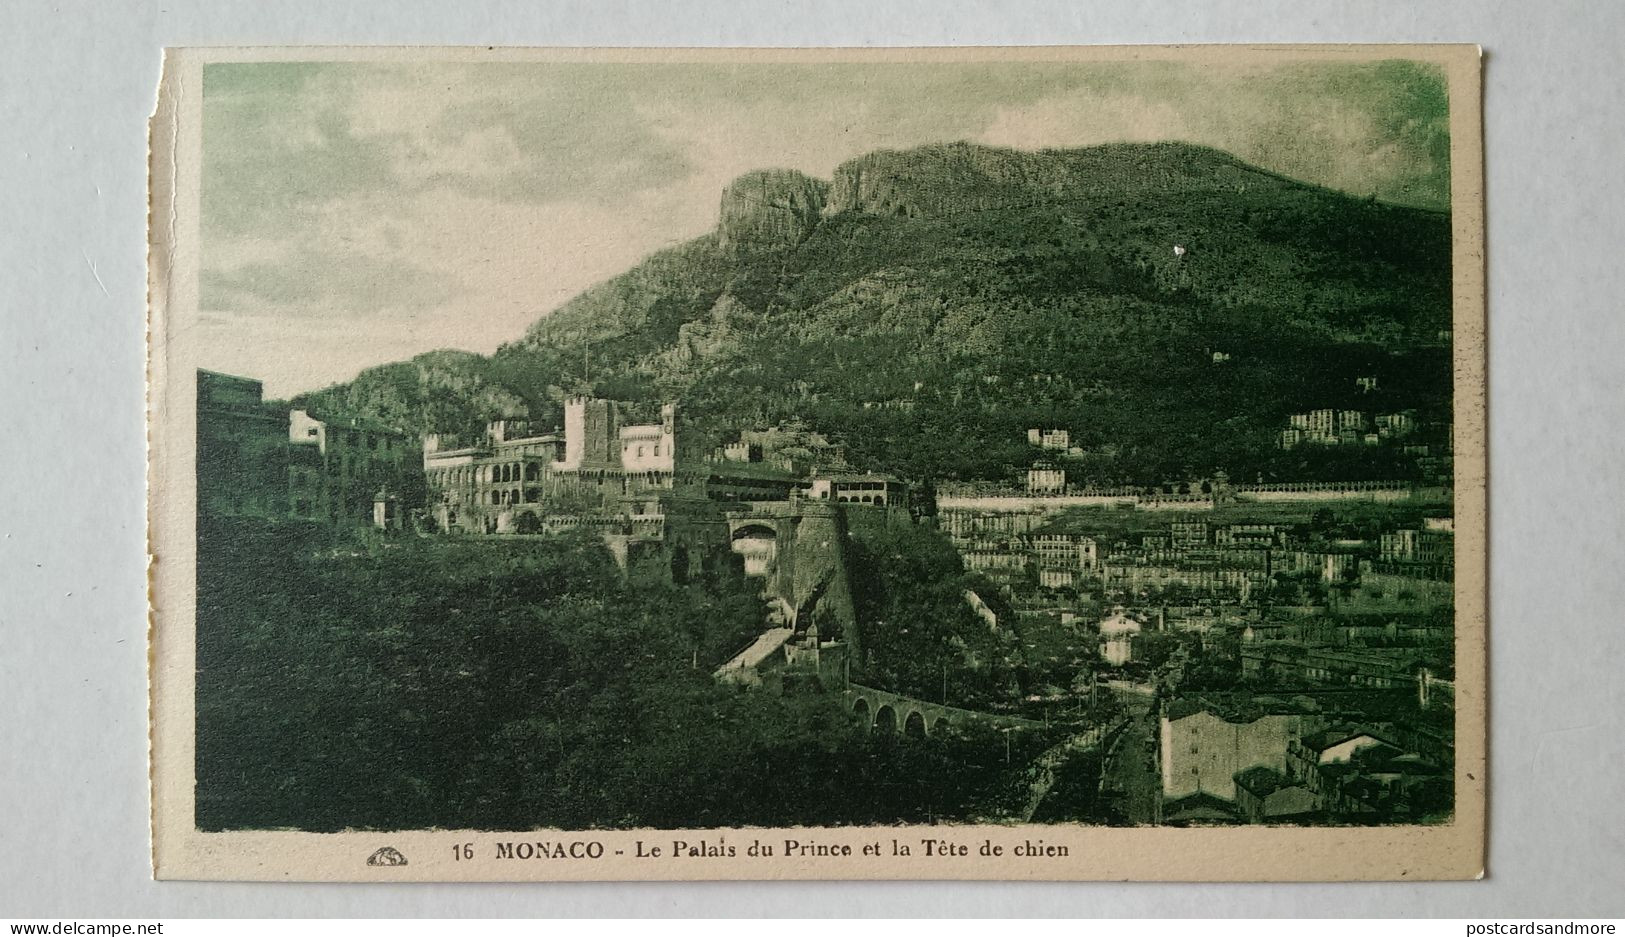 Monaco Monte Carlo Lot of 20 unused postcards Cie. Alsacienne des Arts Photomécaniques Strasbourg ca. 1925